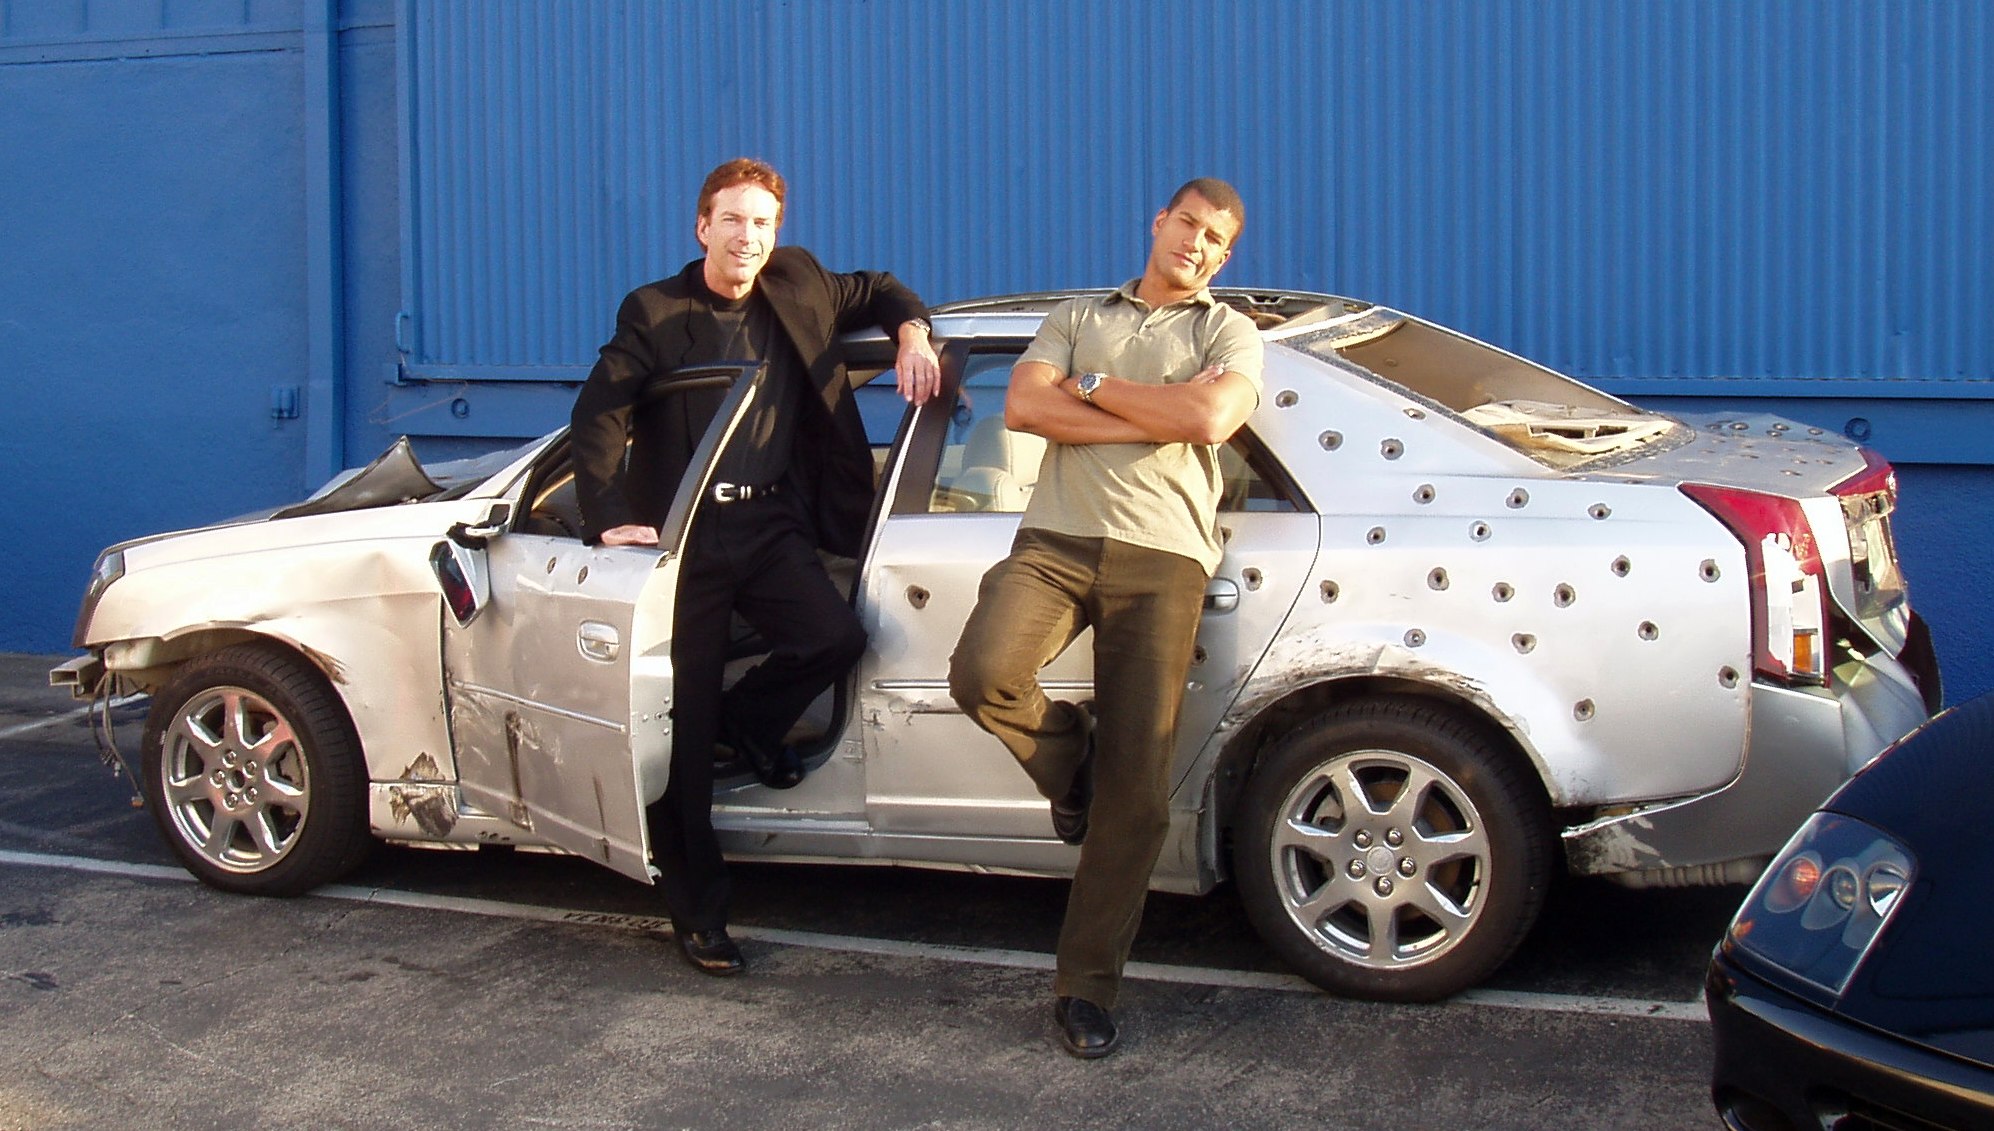 C. Van Tune, Emmett Miller, during KTLA News segment with Cadillac stunt car from The Matrix Reloaded.